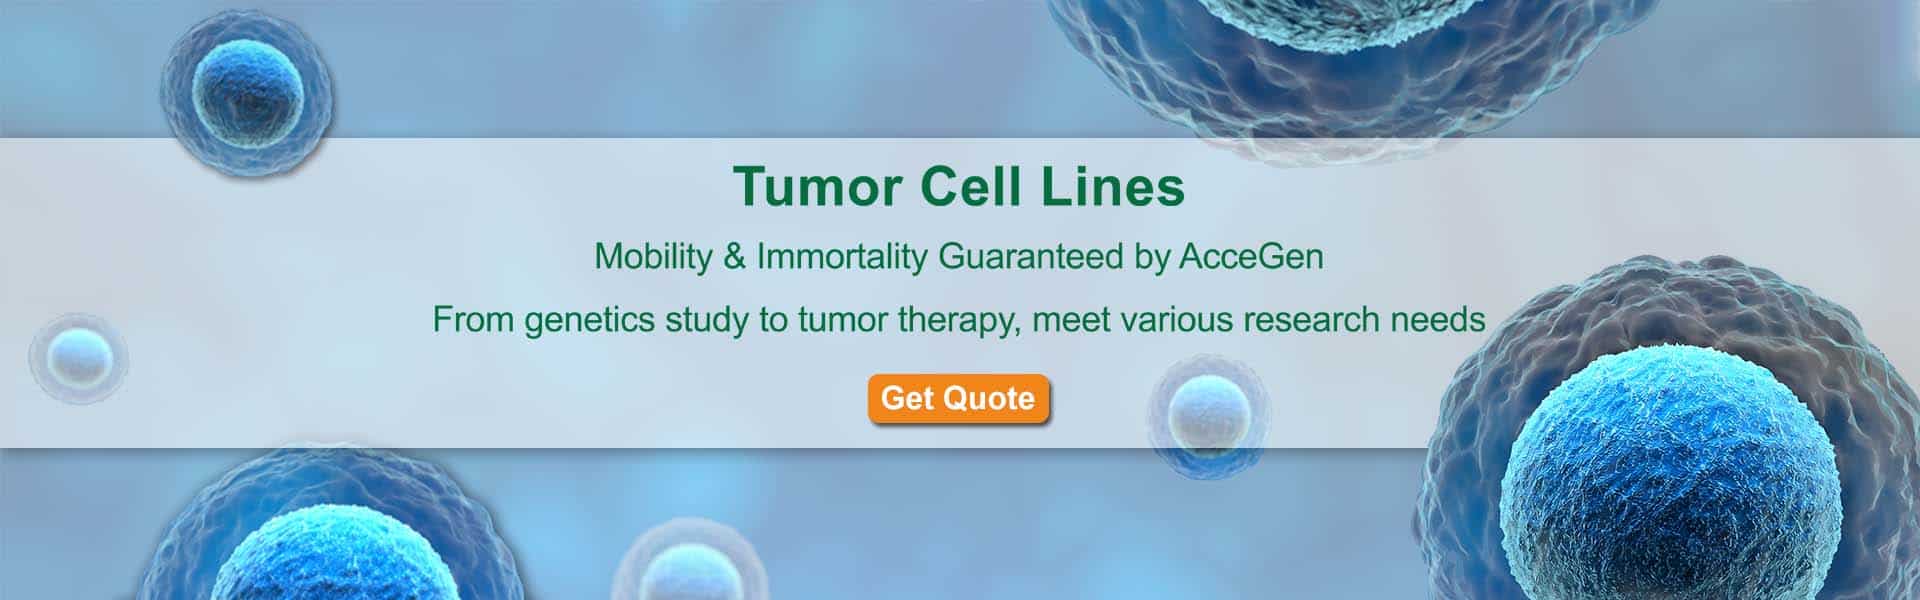 AcceGen Tumor Cell Lines